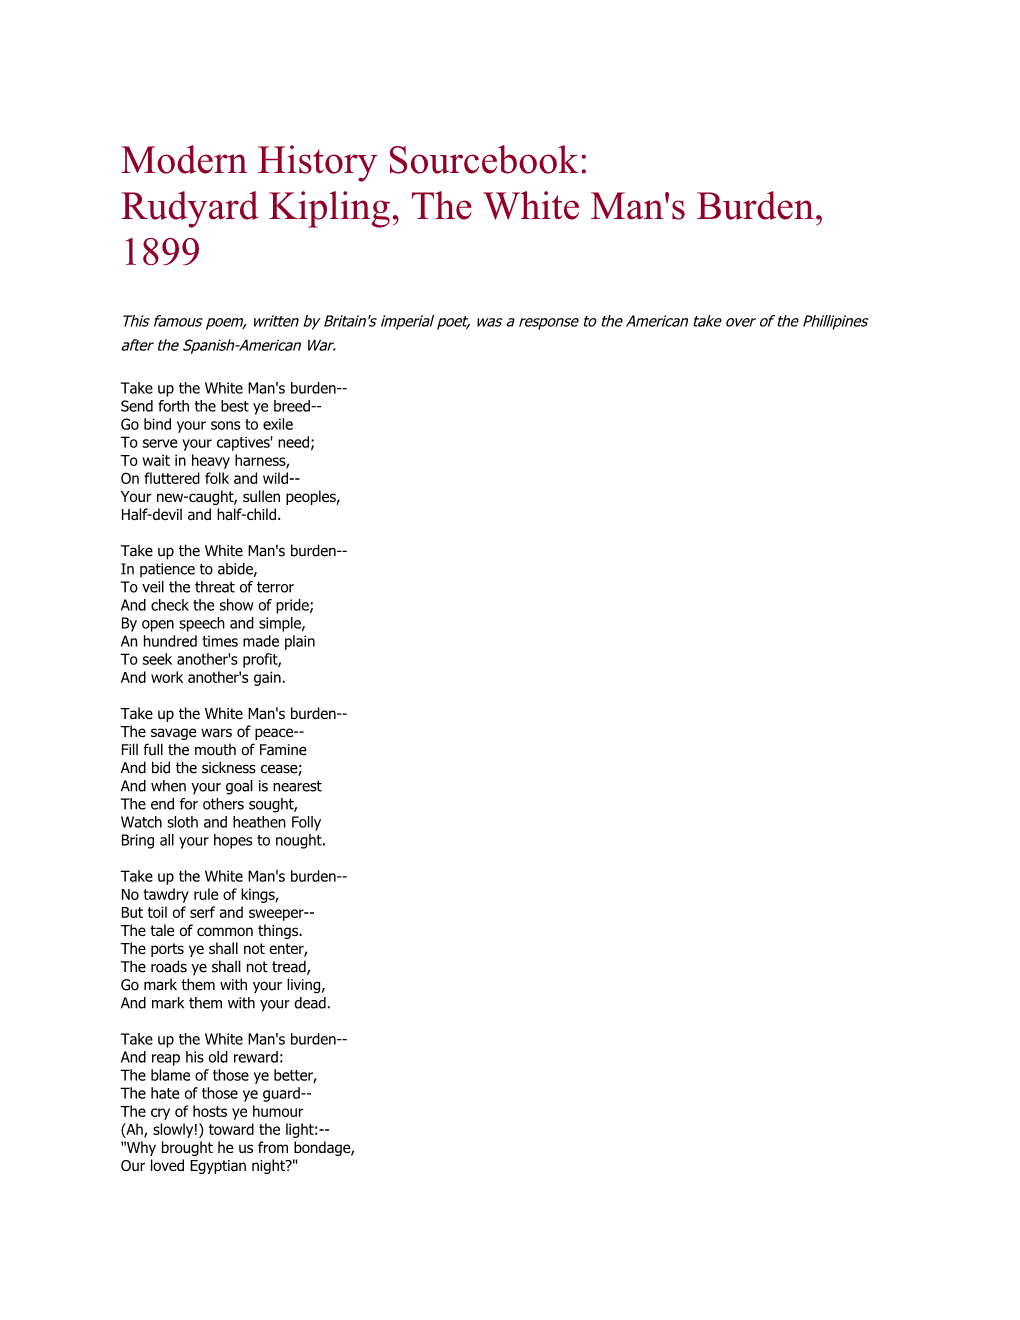 Modern History Sourcebook: Rudyard Kipling, the White Man's Burden, 1899